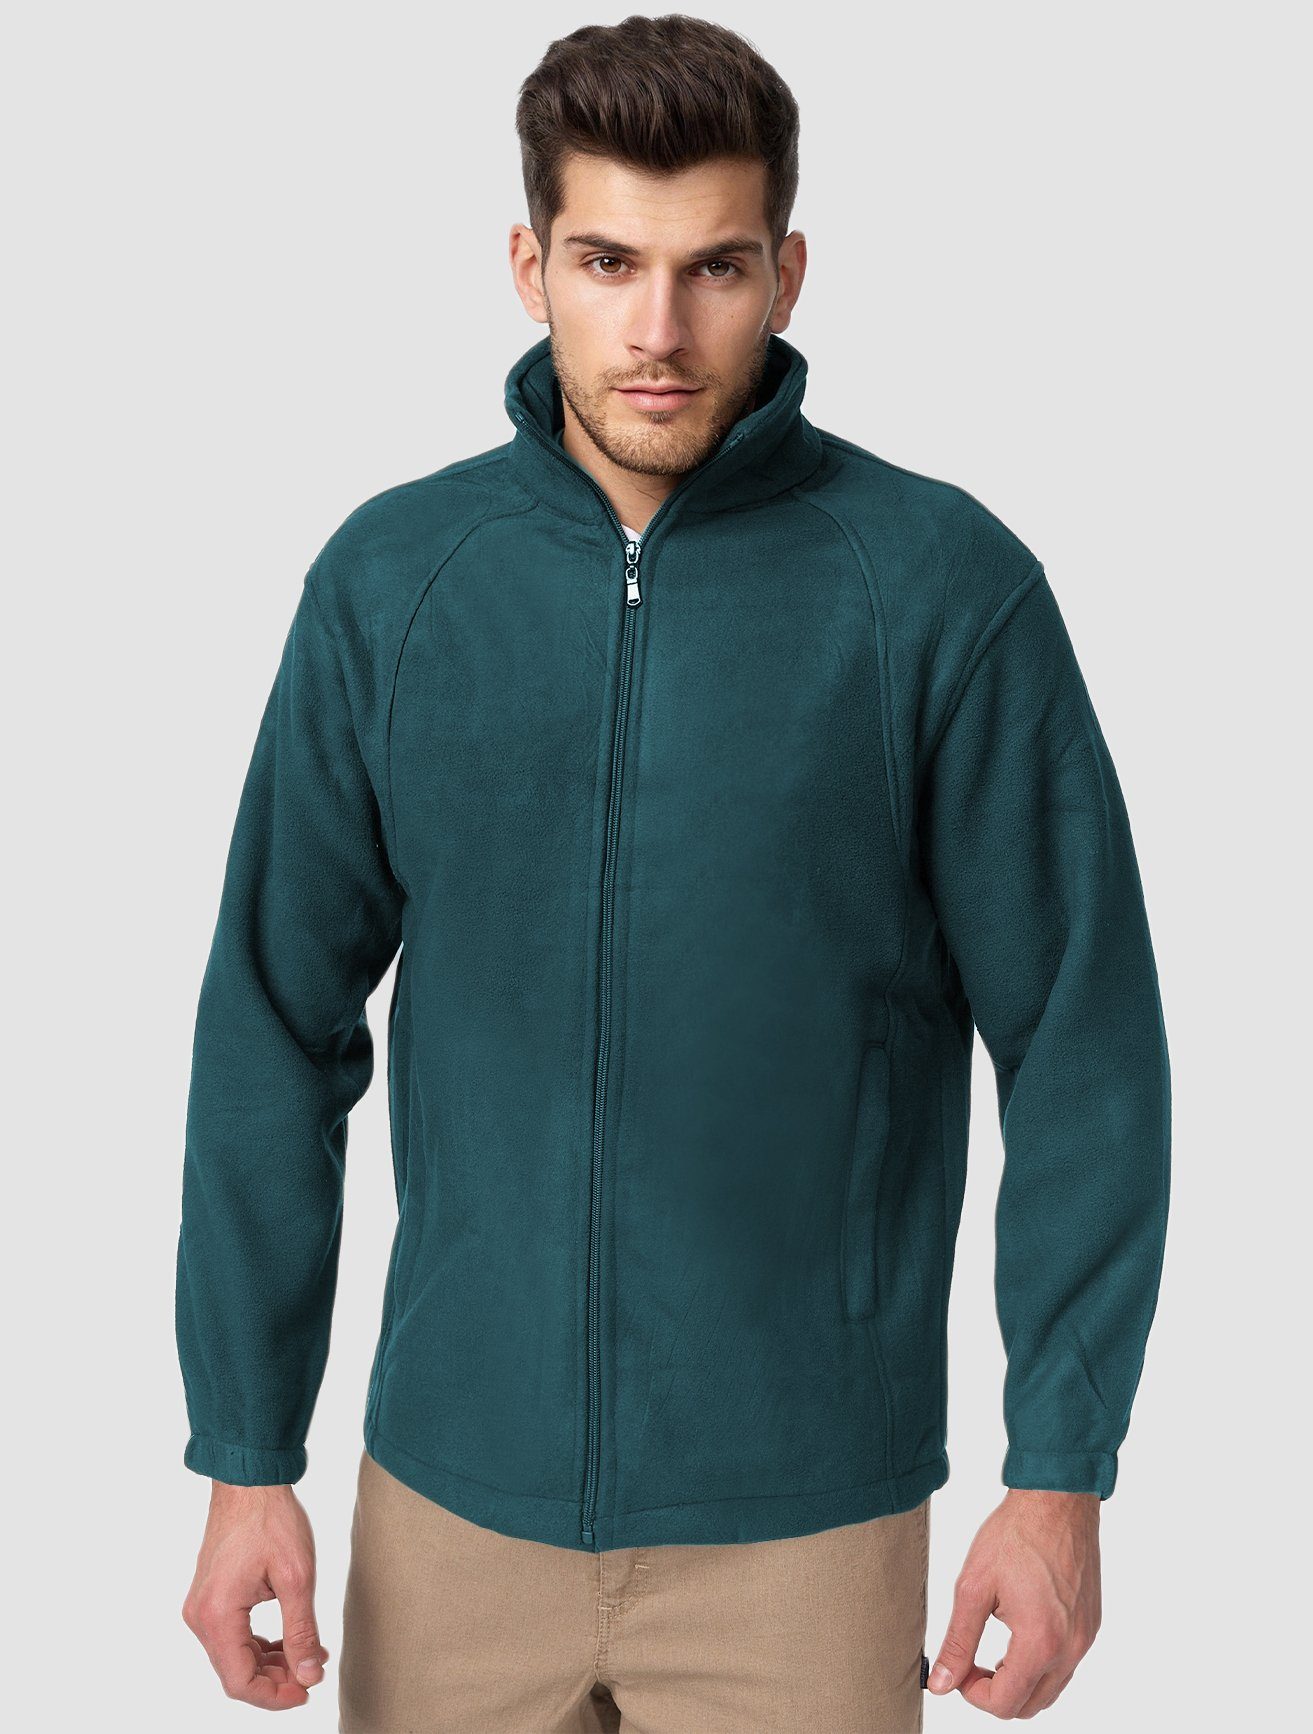 Petrol Zip Fleece Übergangsjacke Kapuze Sweatshirt ohne Jacke in Full Egomaxx 5169 Hoodie